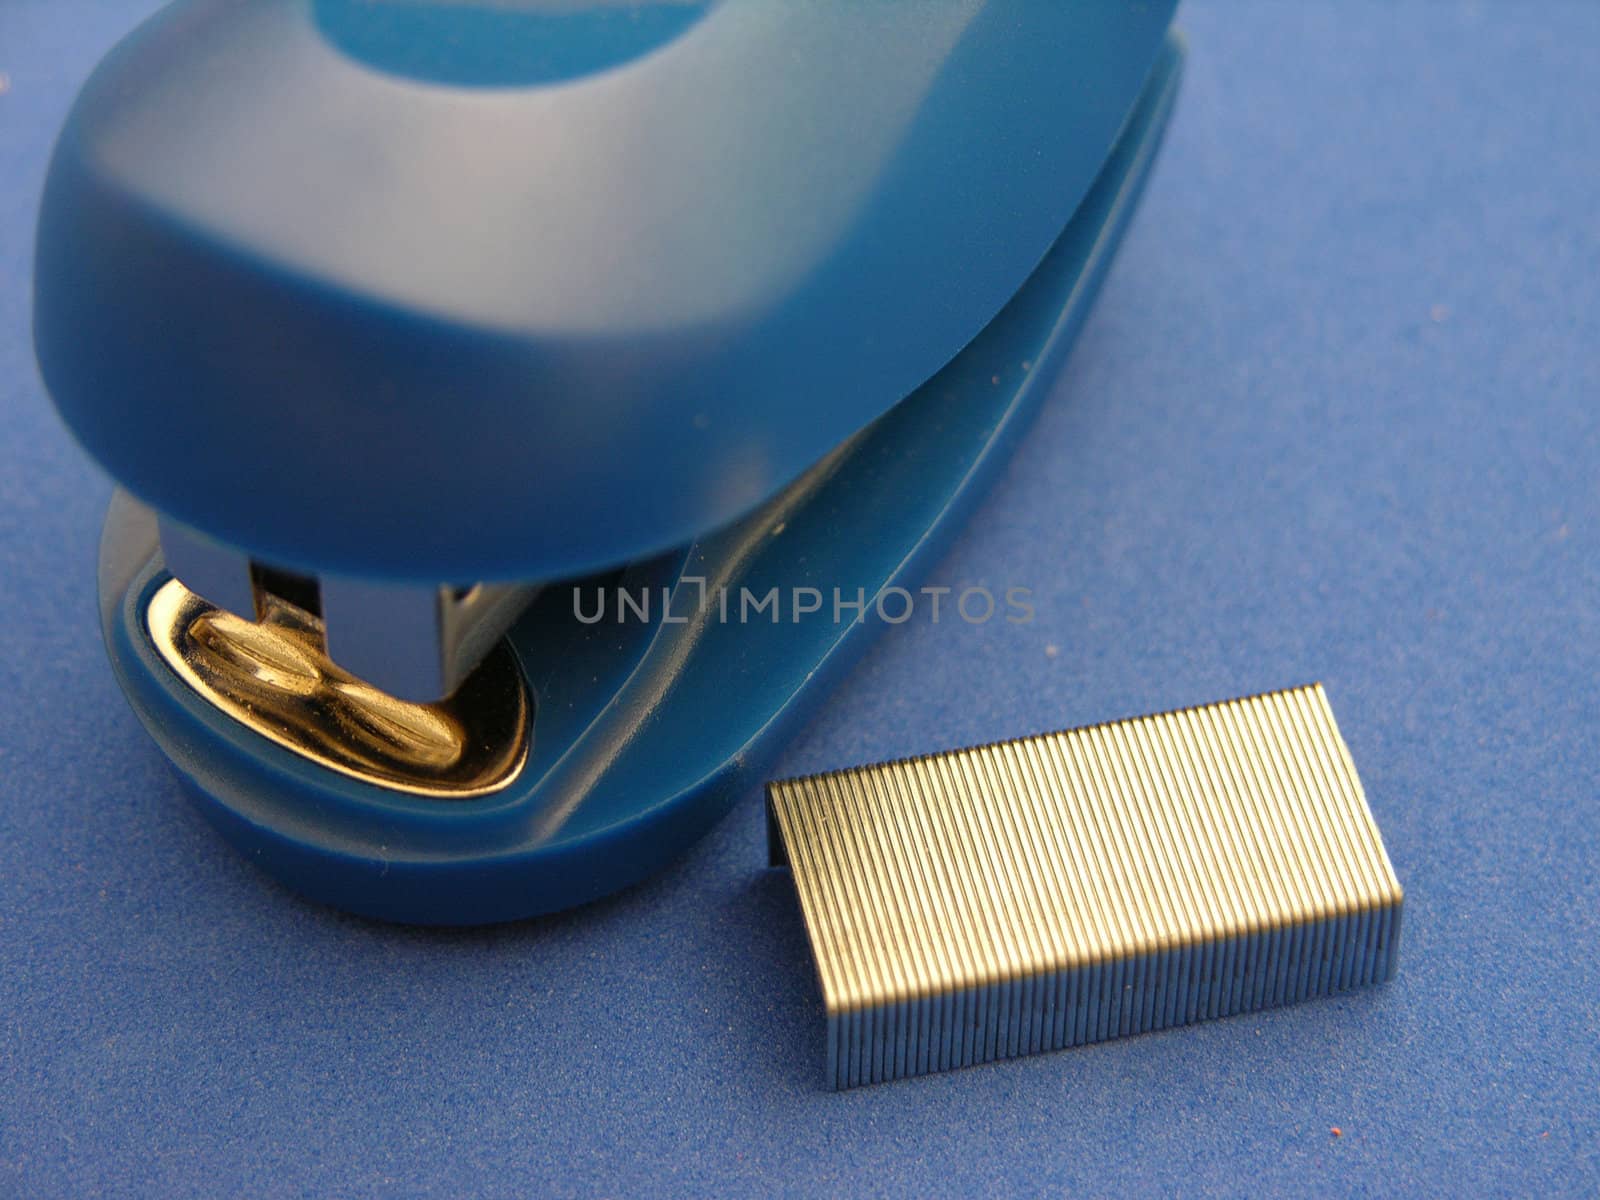 Blue stapler by northwoodsphoto